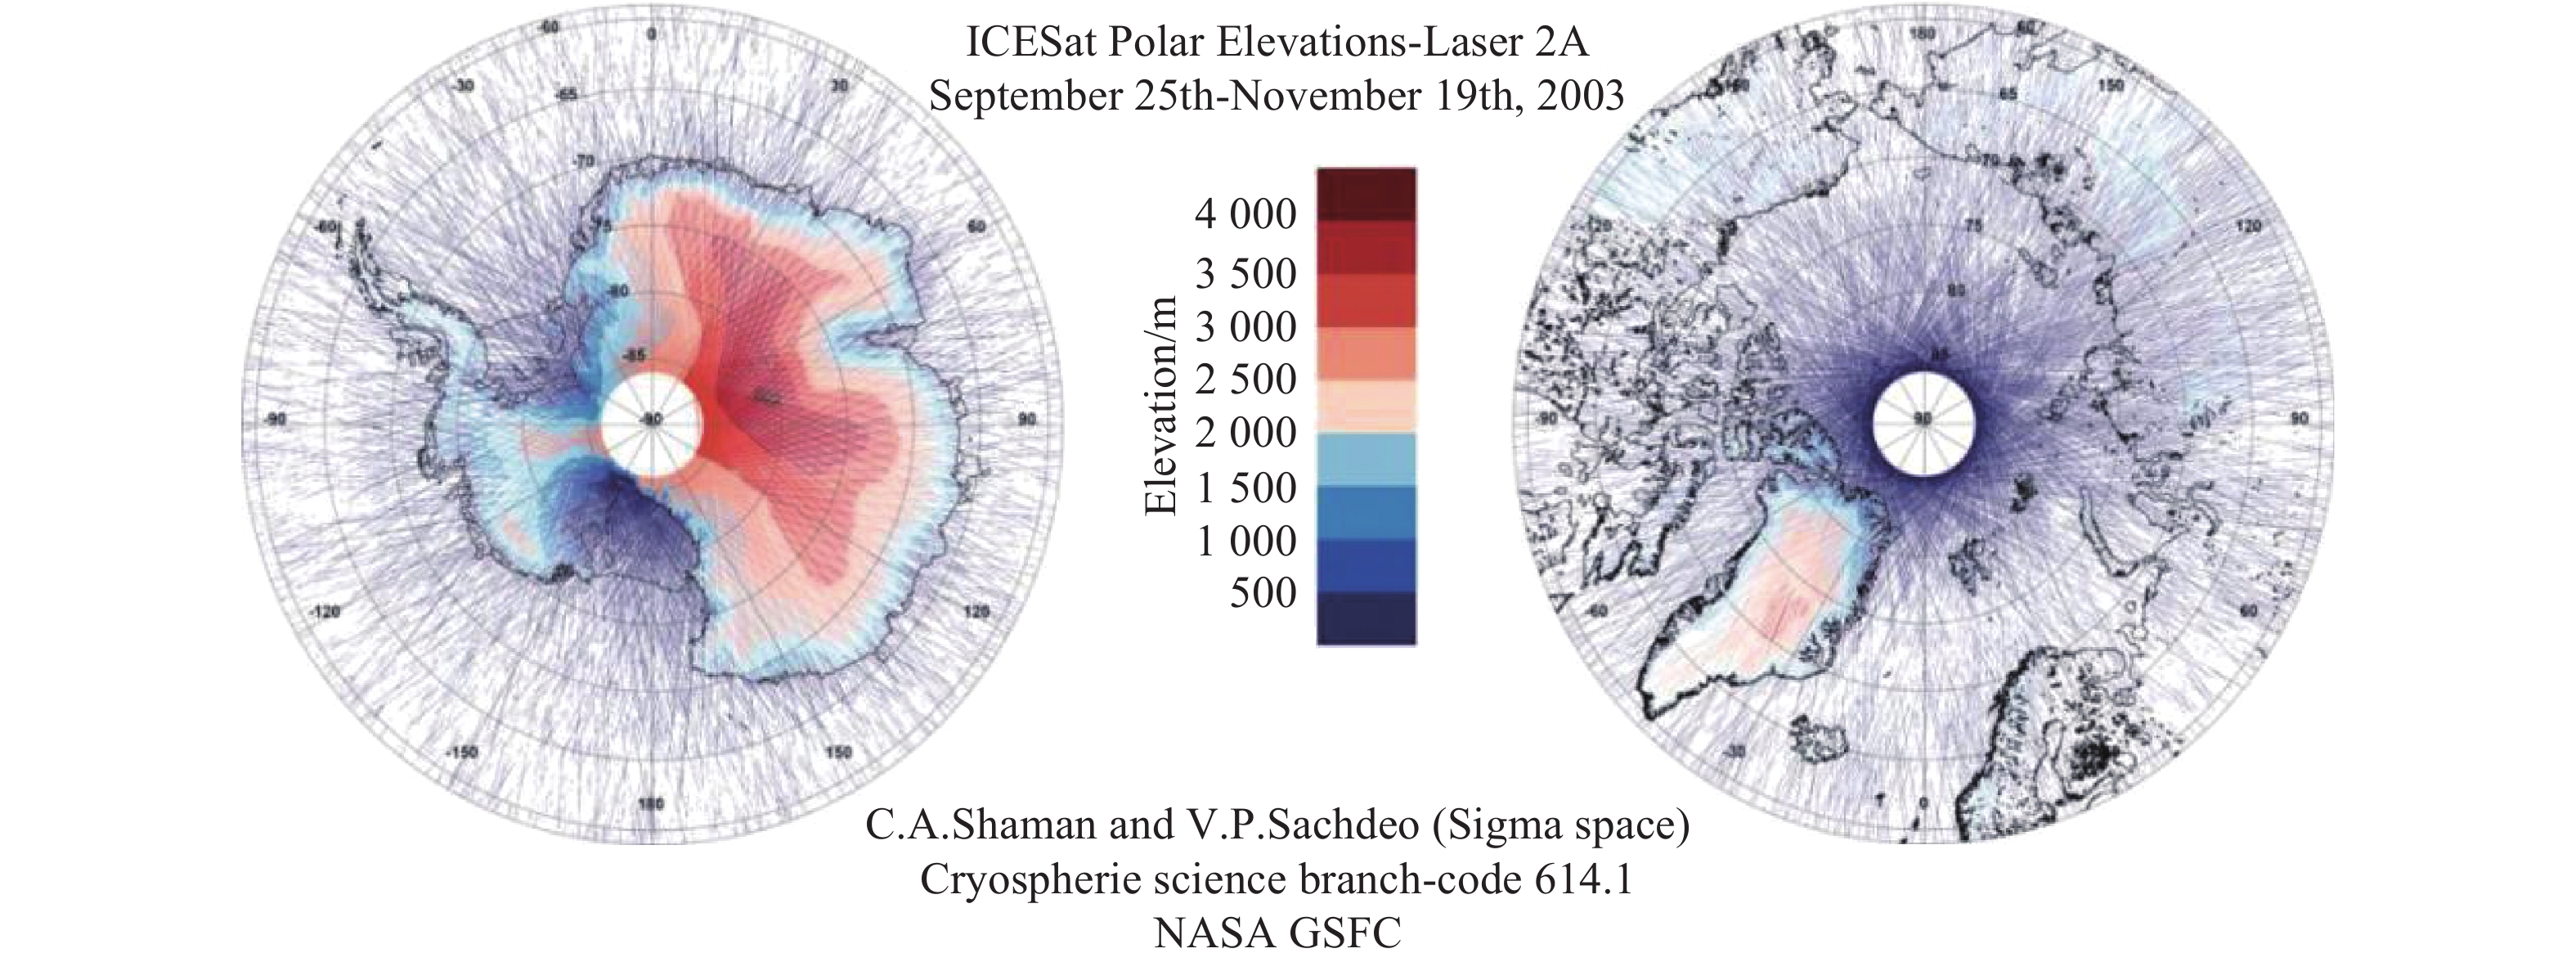 Polar application analysis of ICESat-1 altimetry data[7]